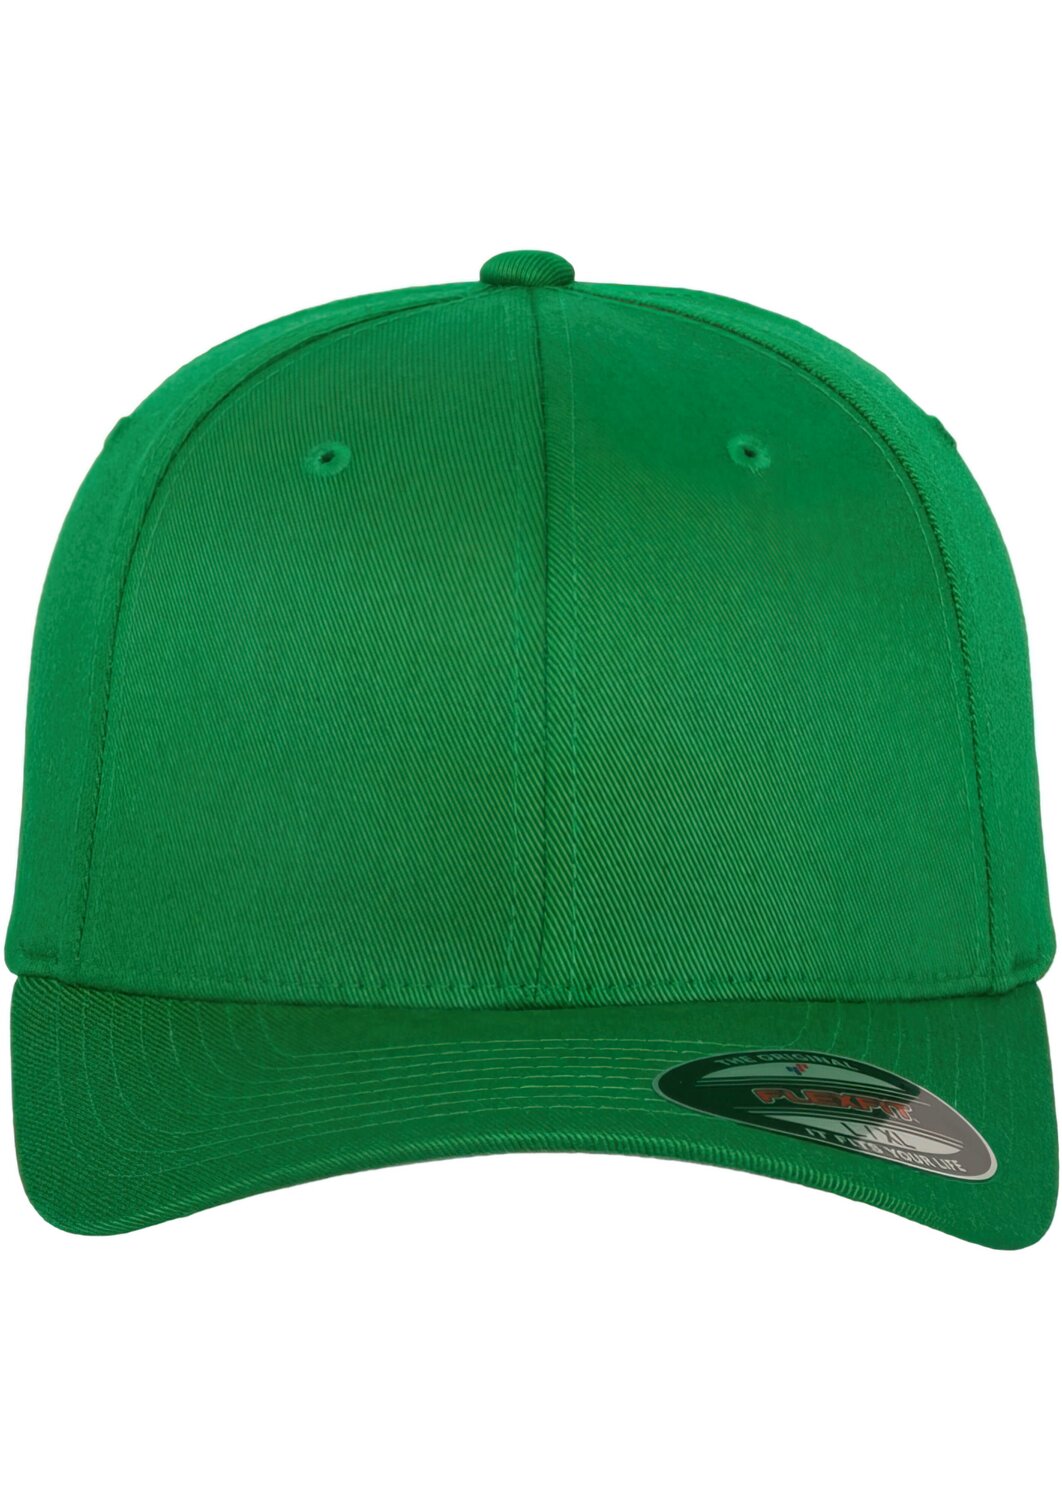 pepper Combed MAXISCOOT Baseball green Flexfit Cap Wooly |